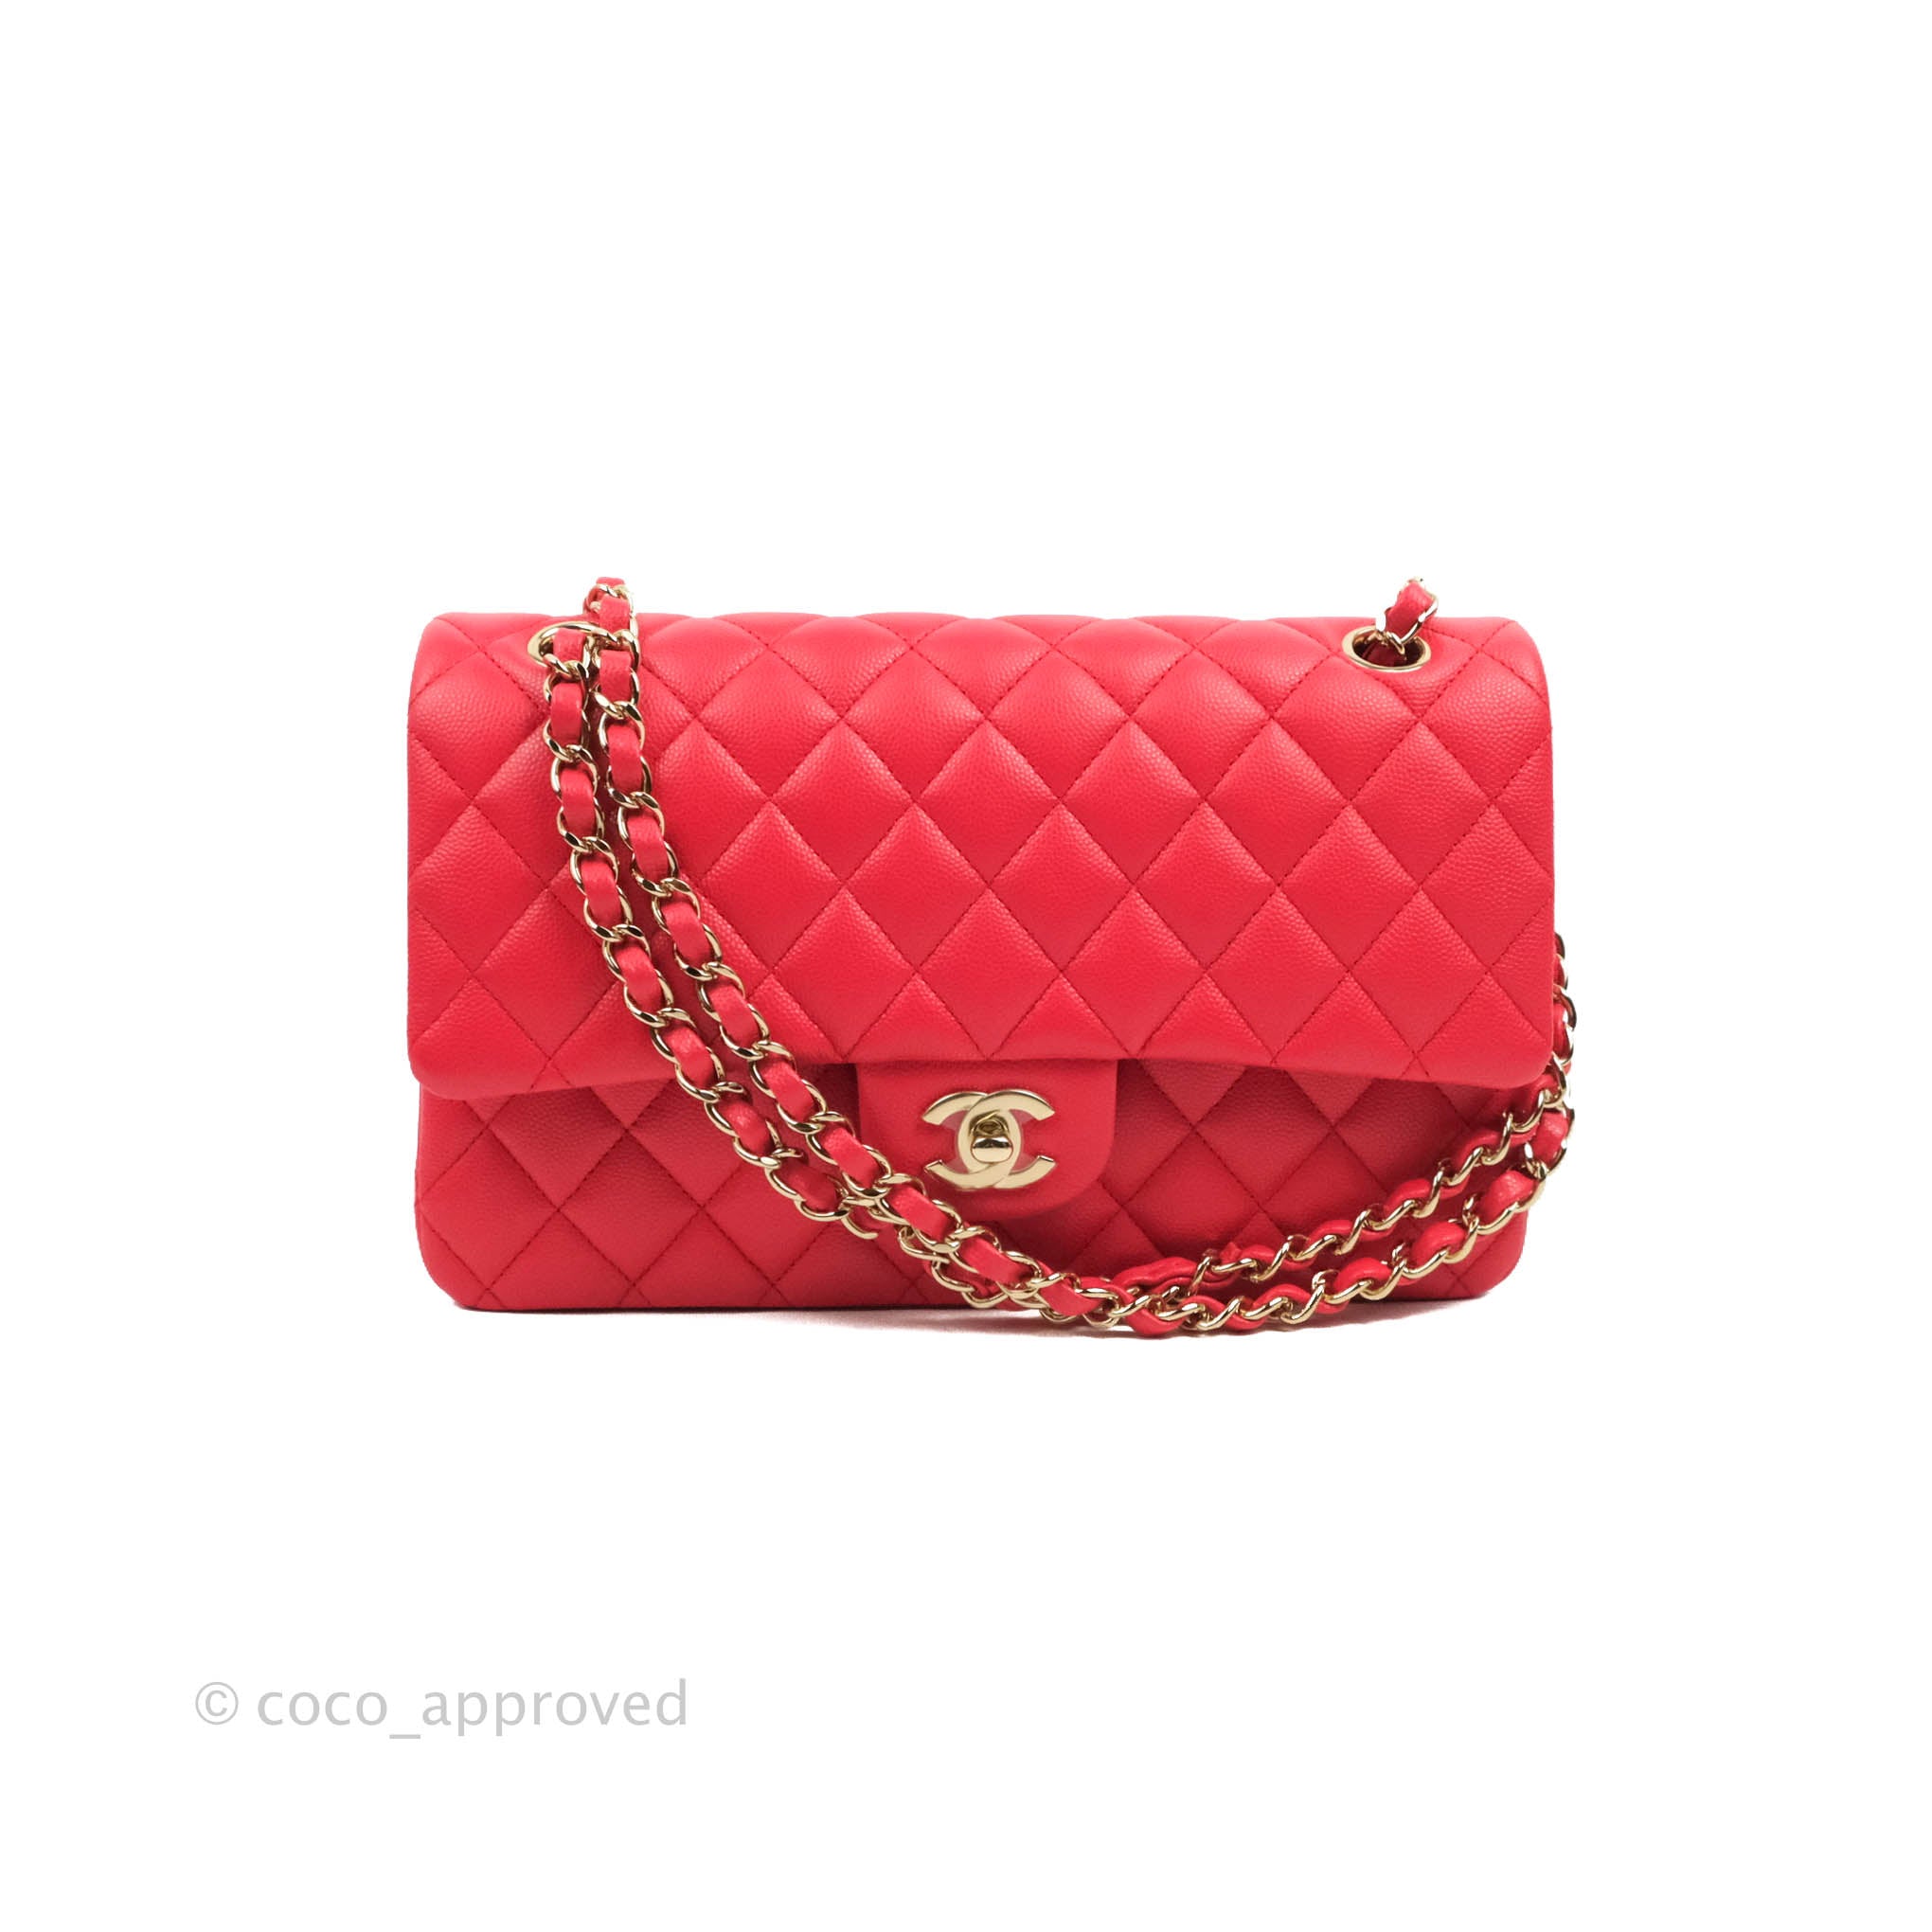 Red CHANEL limited edition bag  VALOIS VINTAGE PARIS